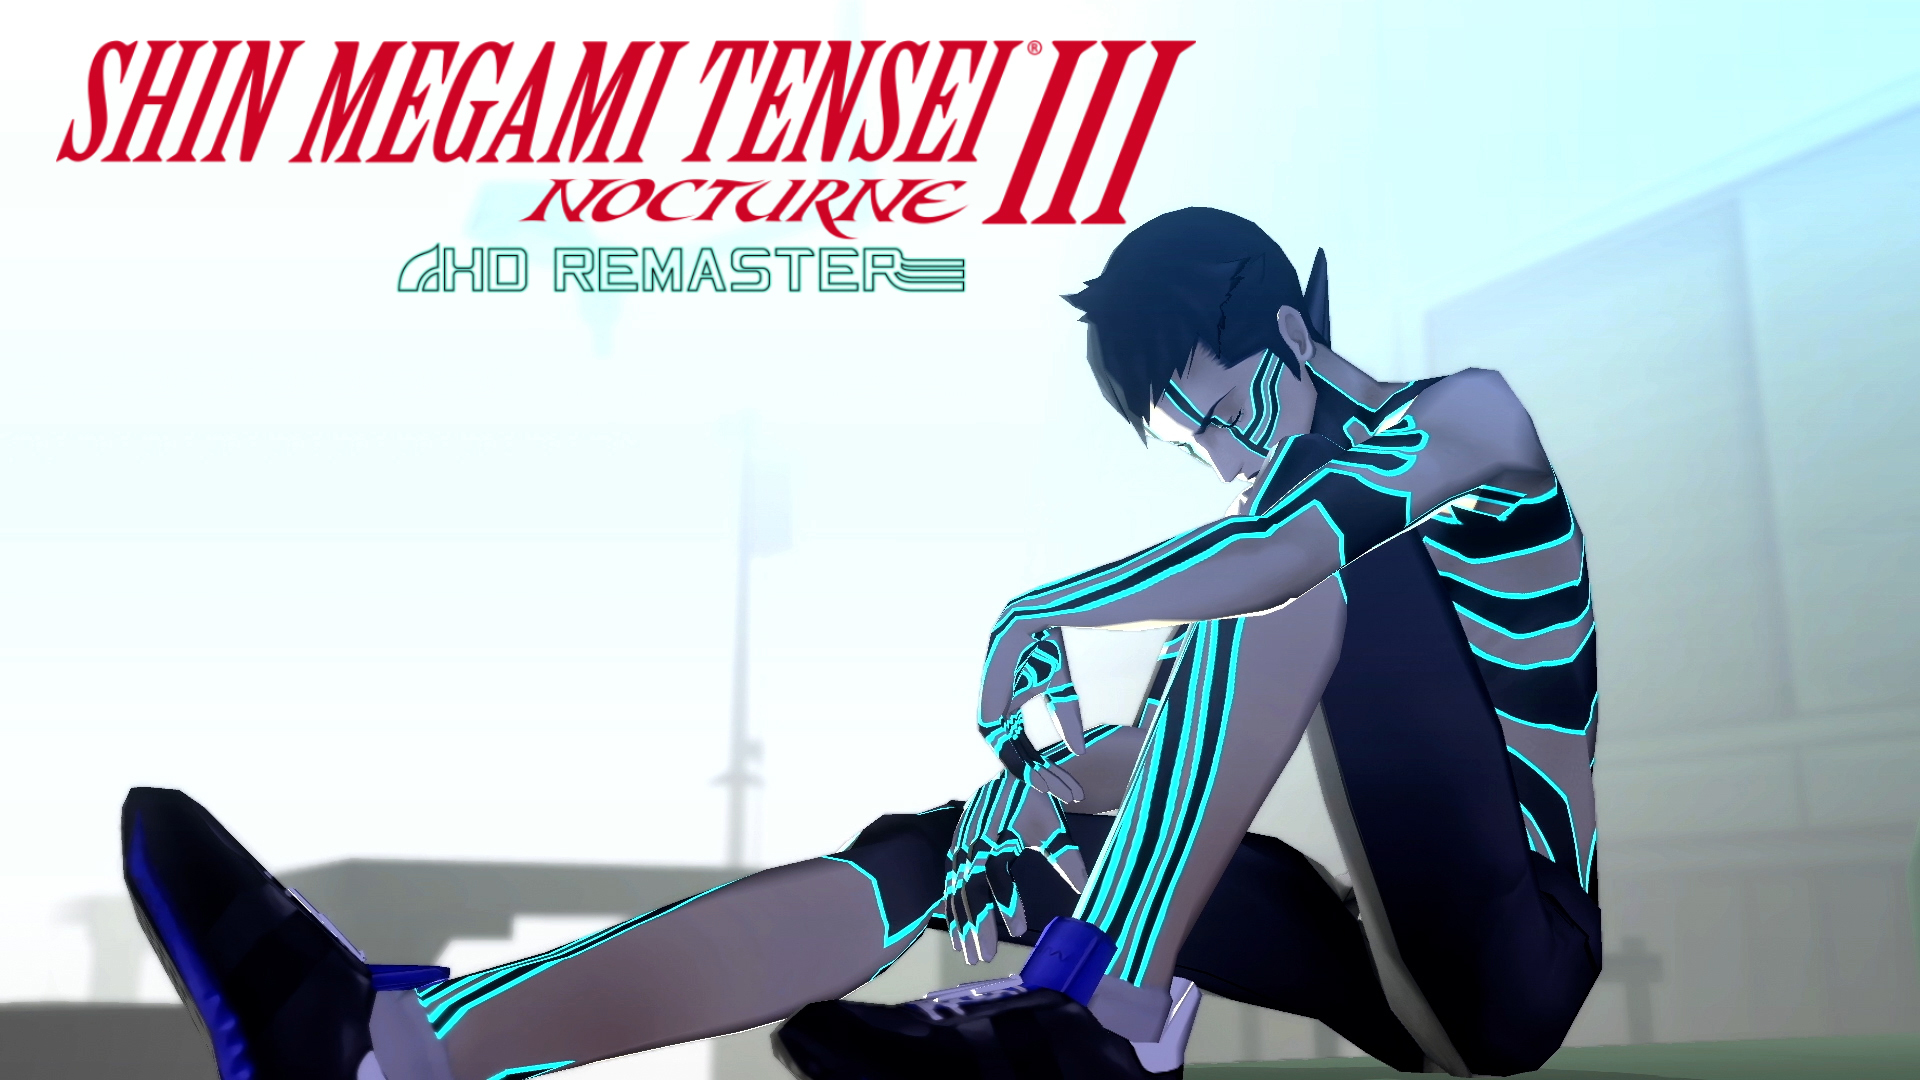 Shin Megami Tensei III Nocturne Hd Remaster 07. srpnja 20.